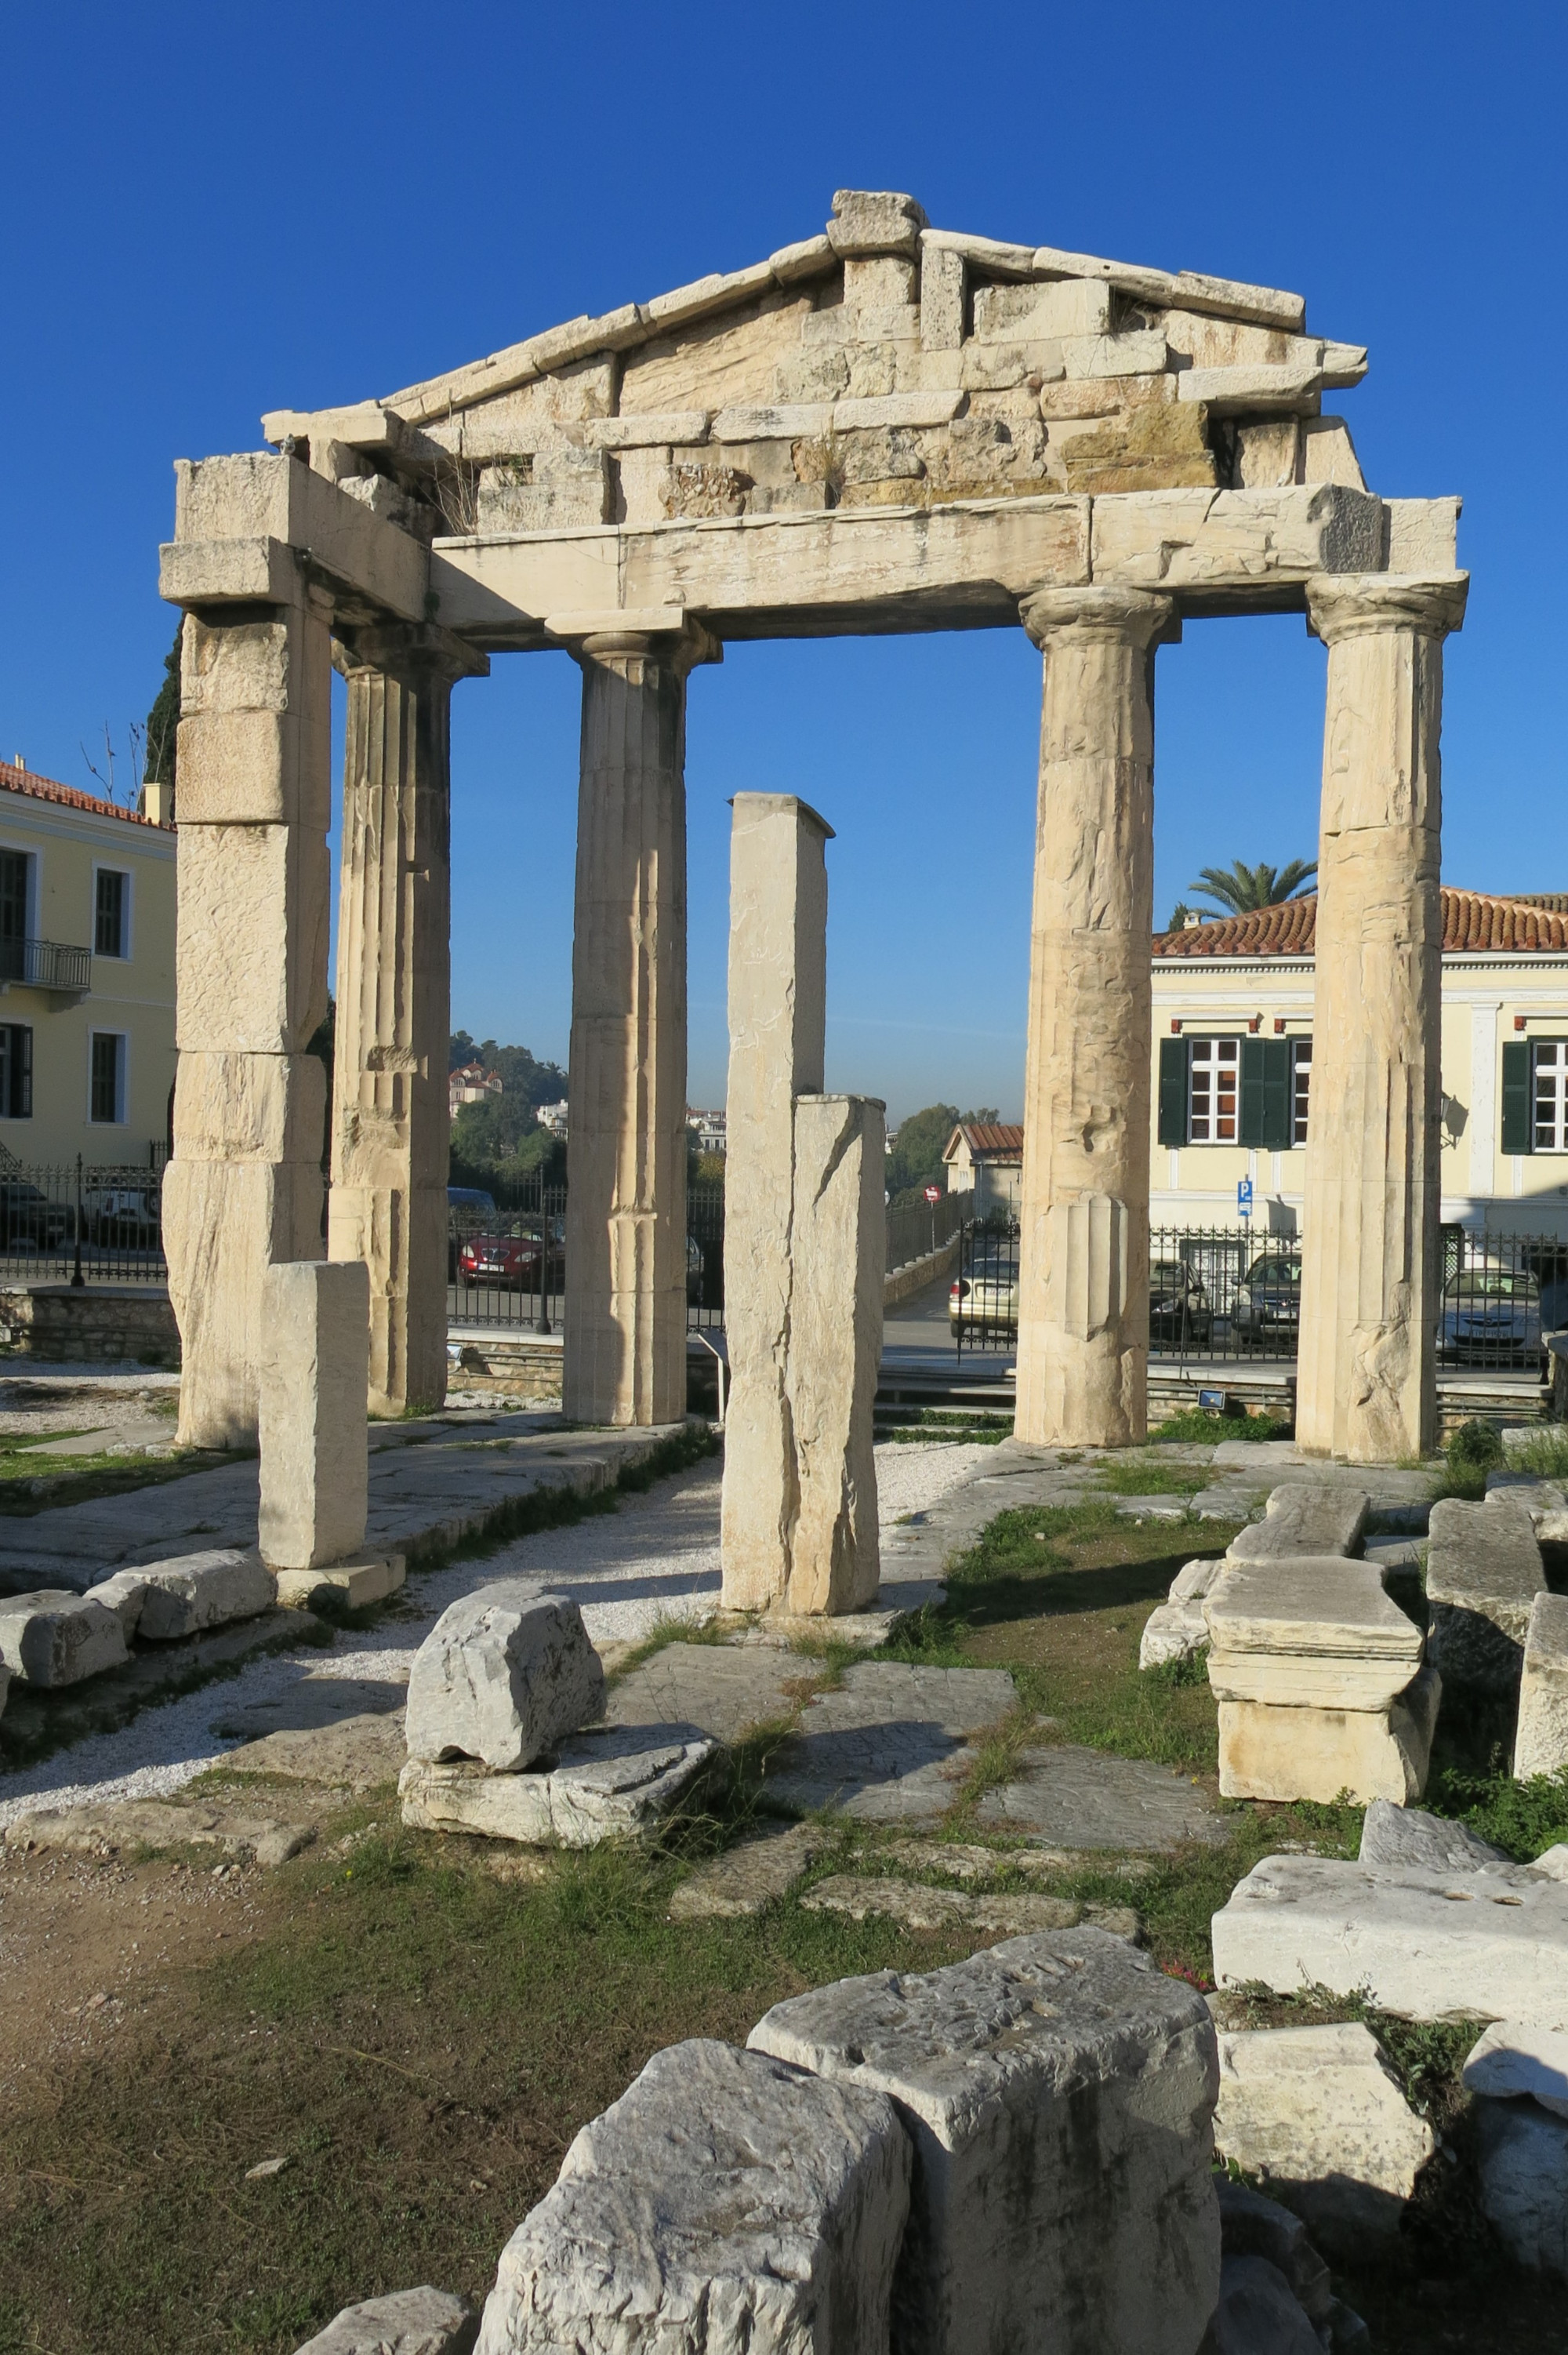 Ancient Agora, Греция